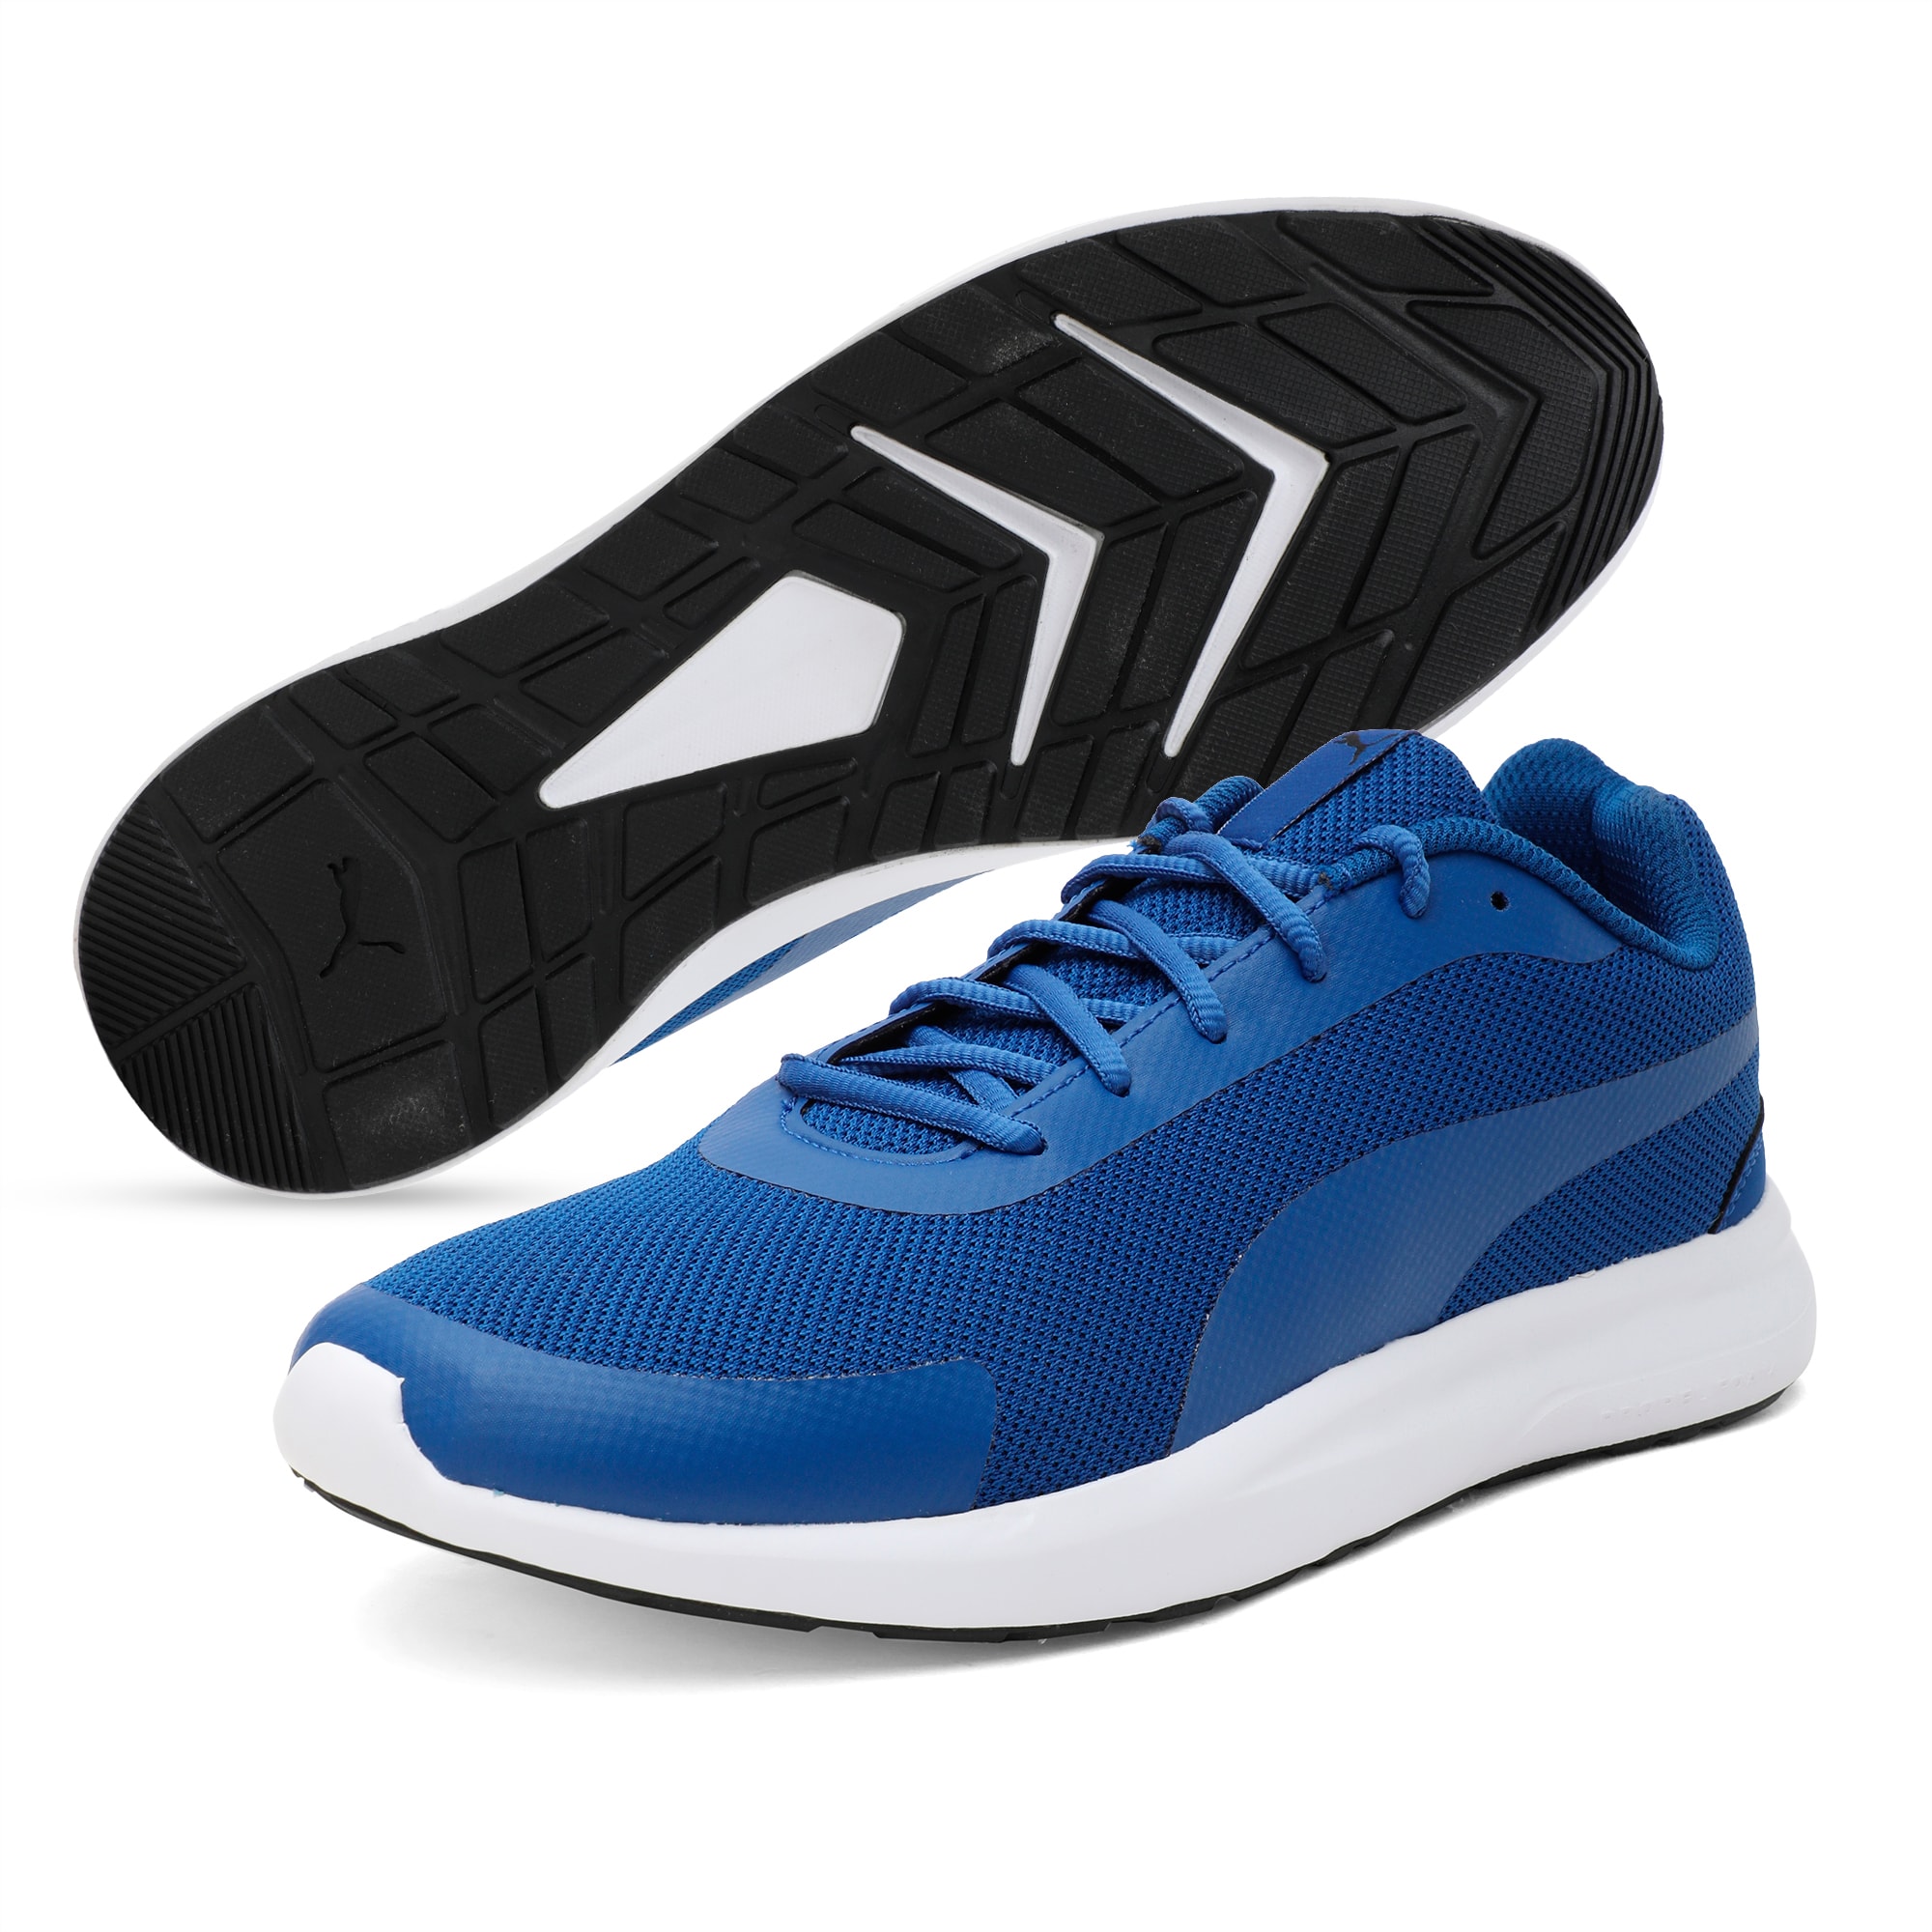 puma propel 3d idp running shoes for men